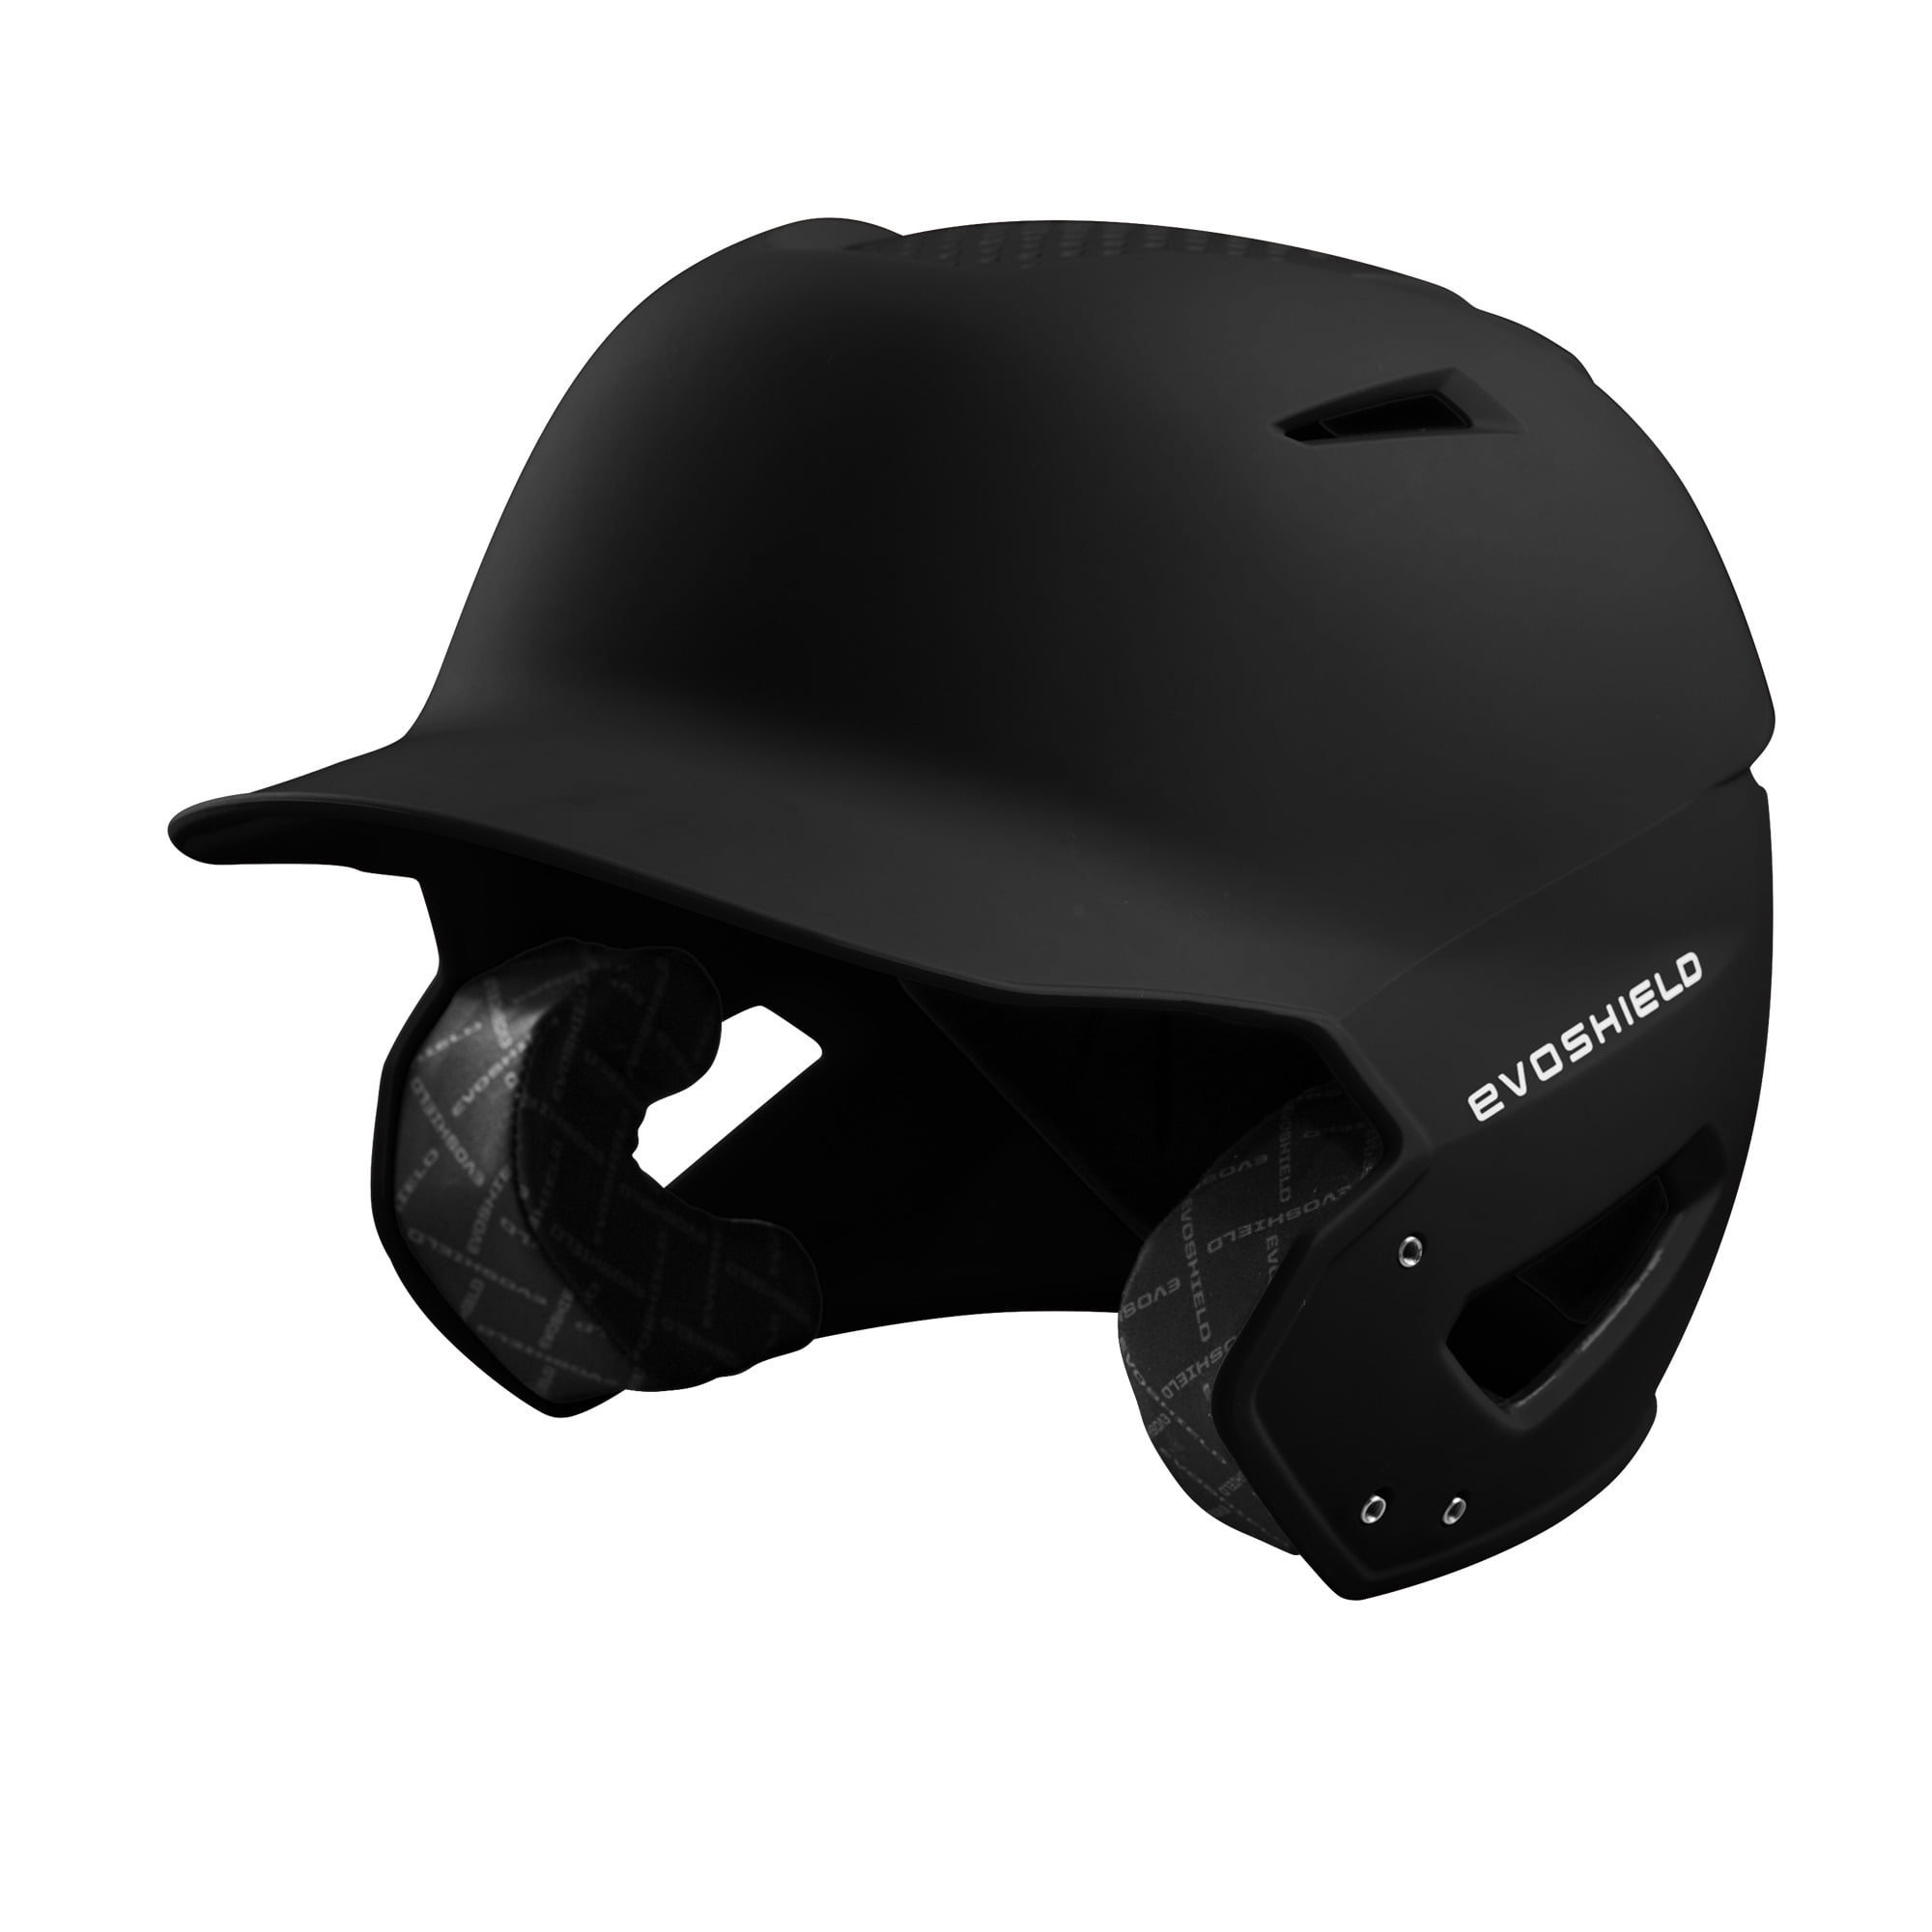 Details about   Rawlings Coolflo/Vapor Molded OSFM Baseball Helmet Black 